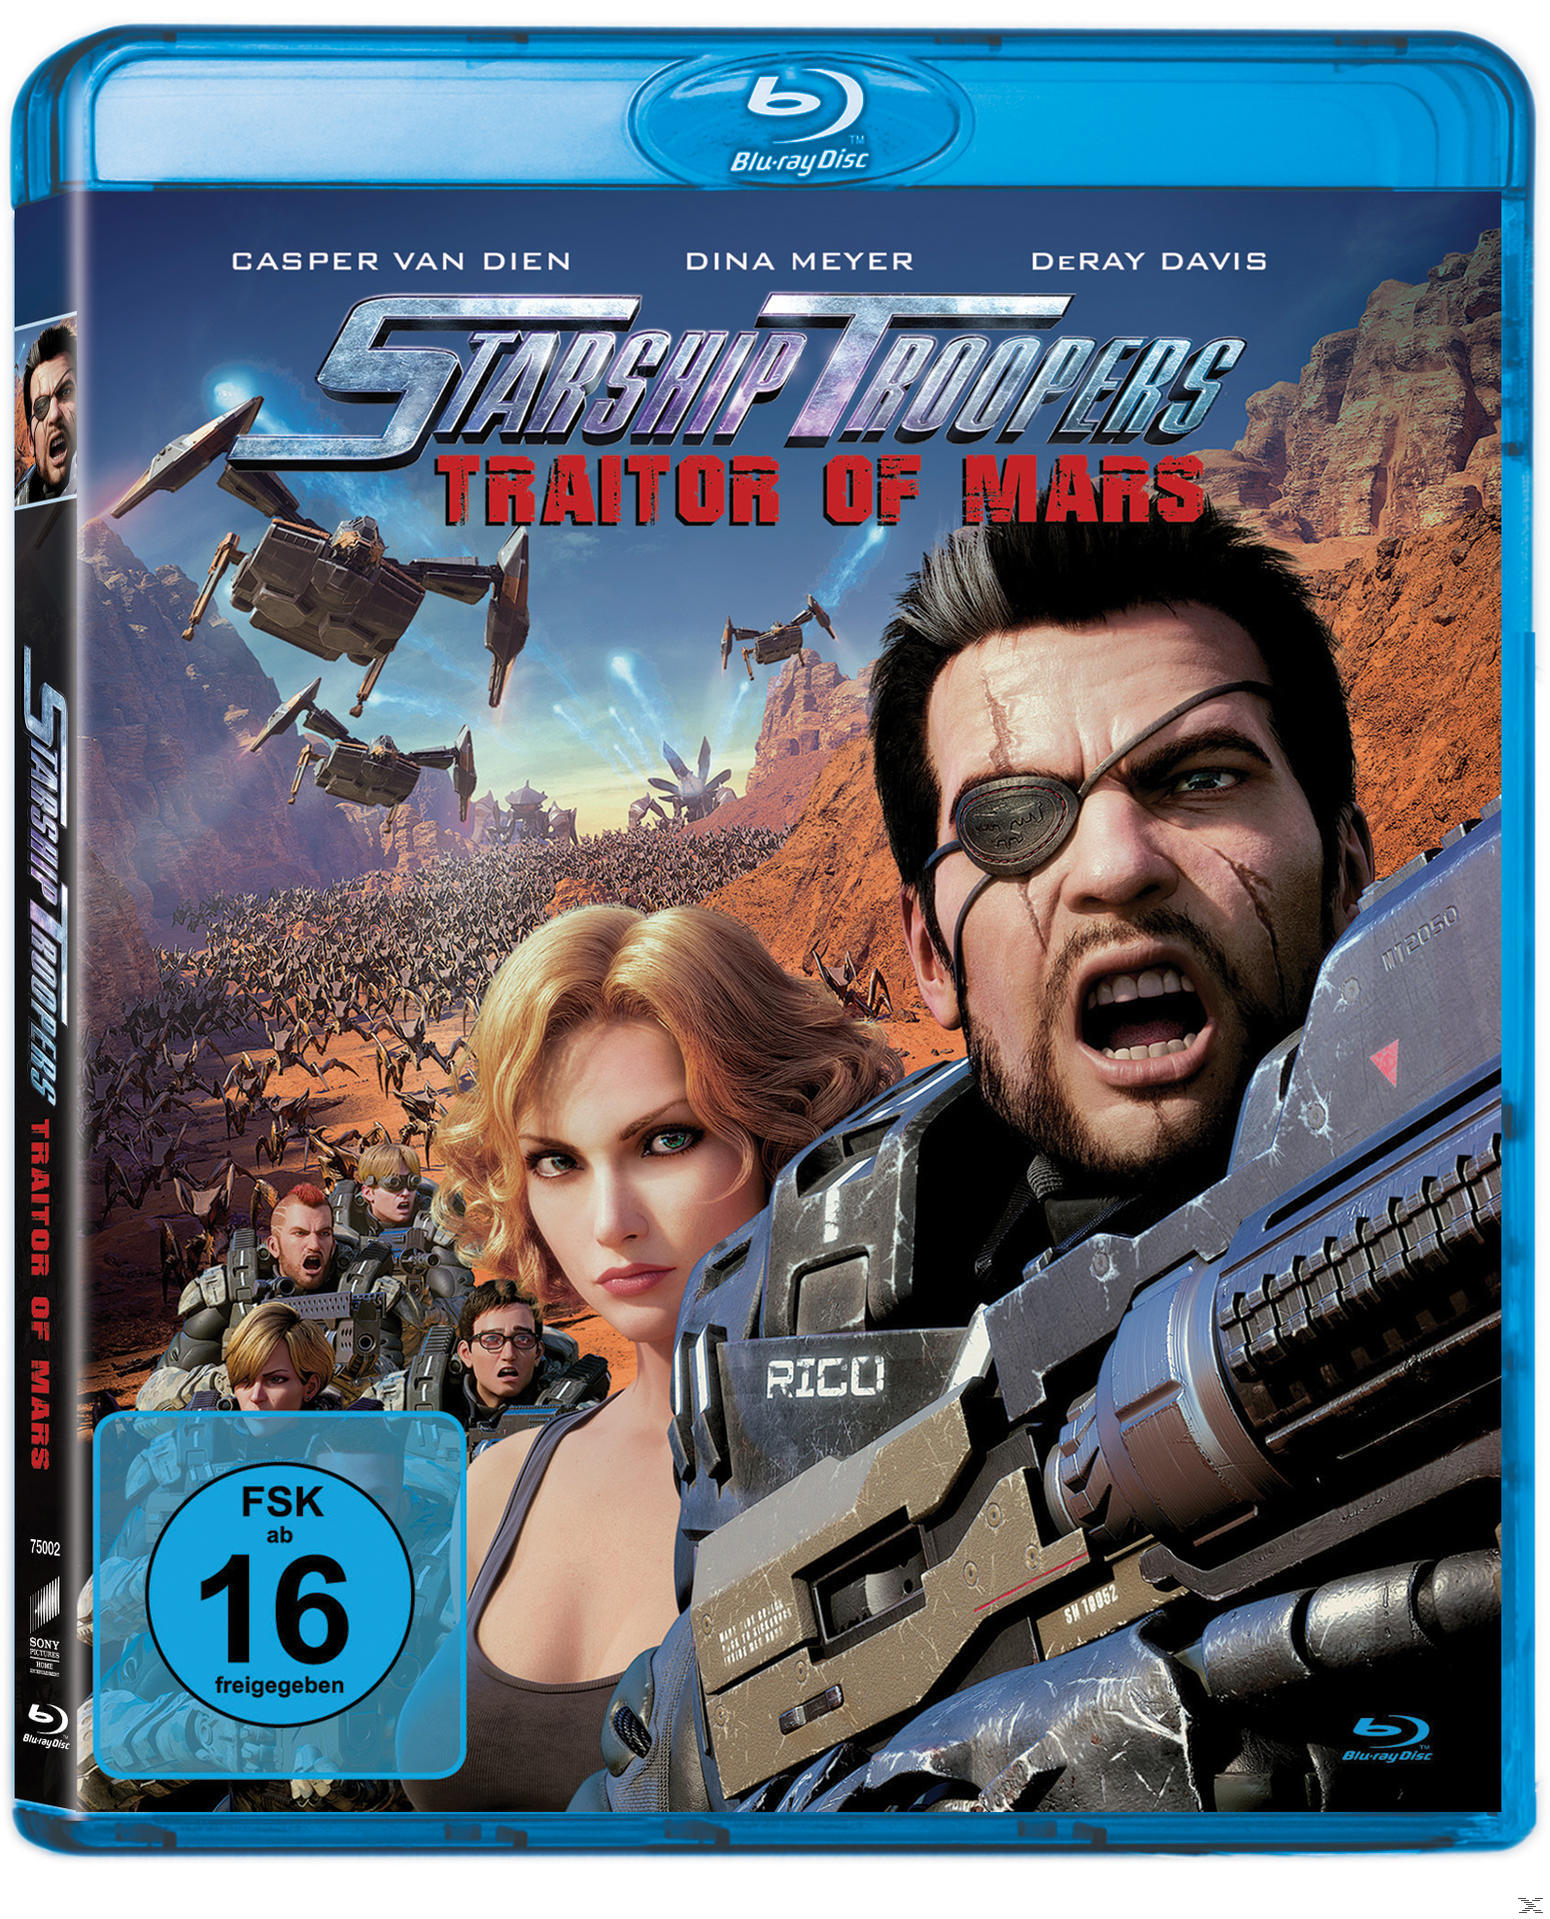 Starship Troopers: Traitor Blu-ray of Mars